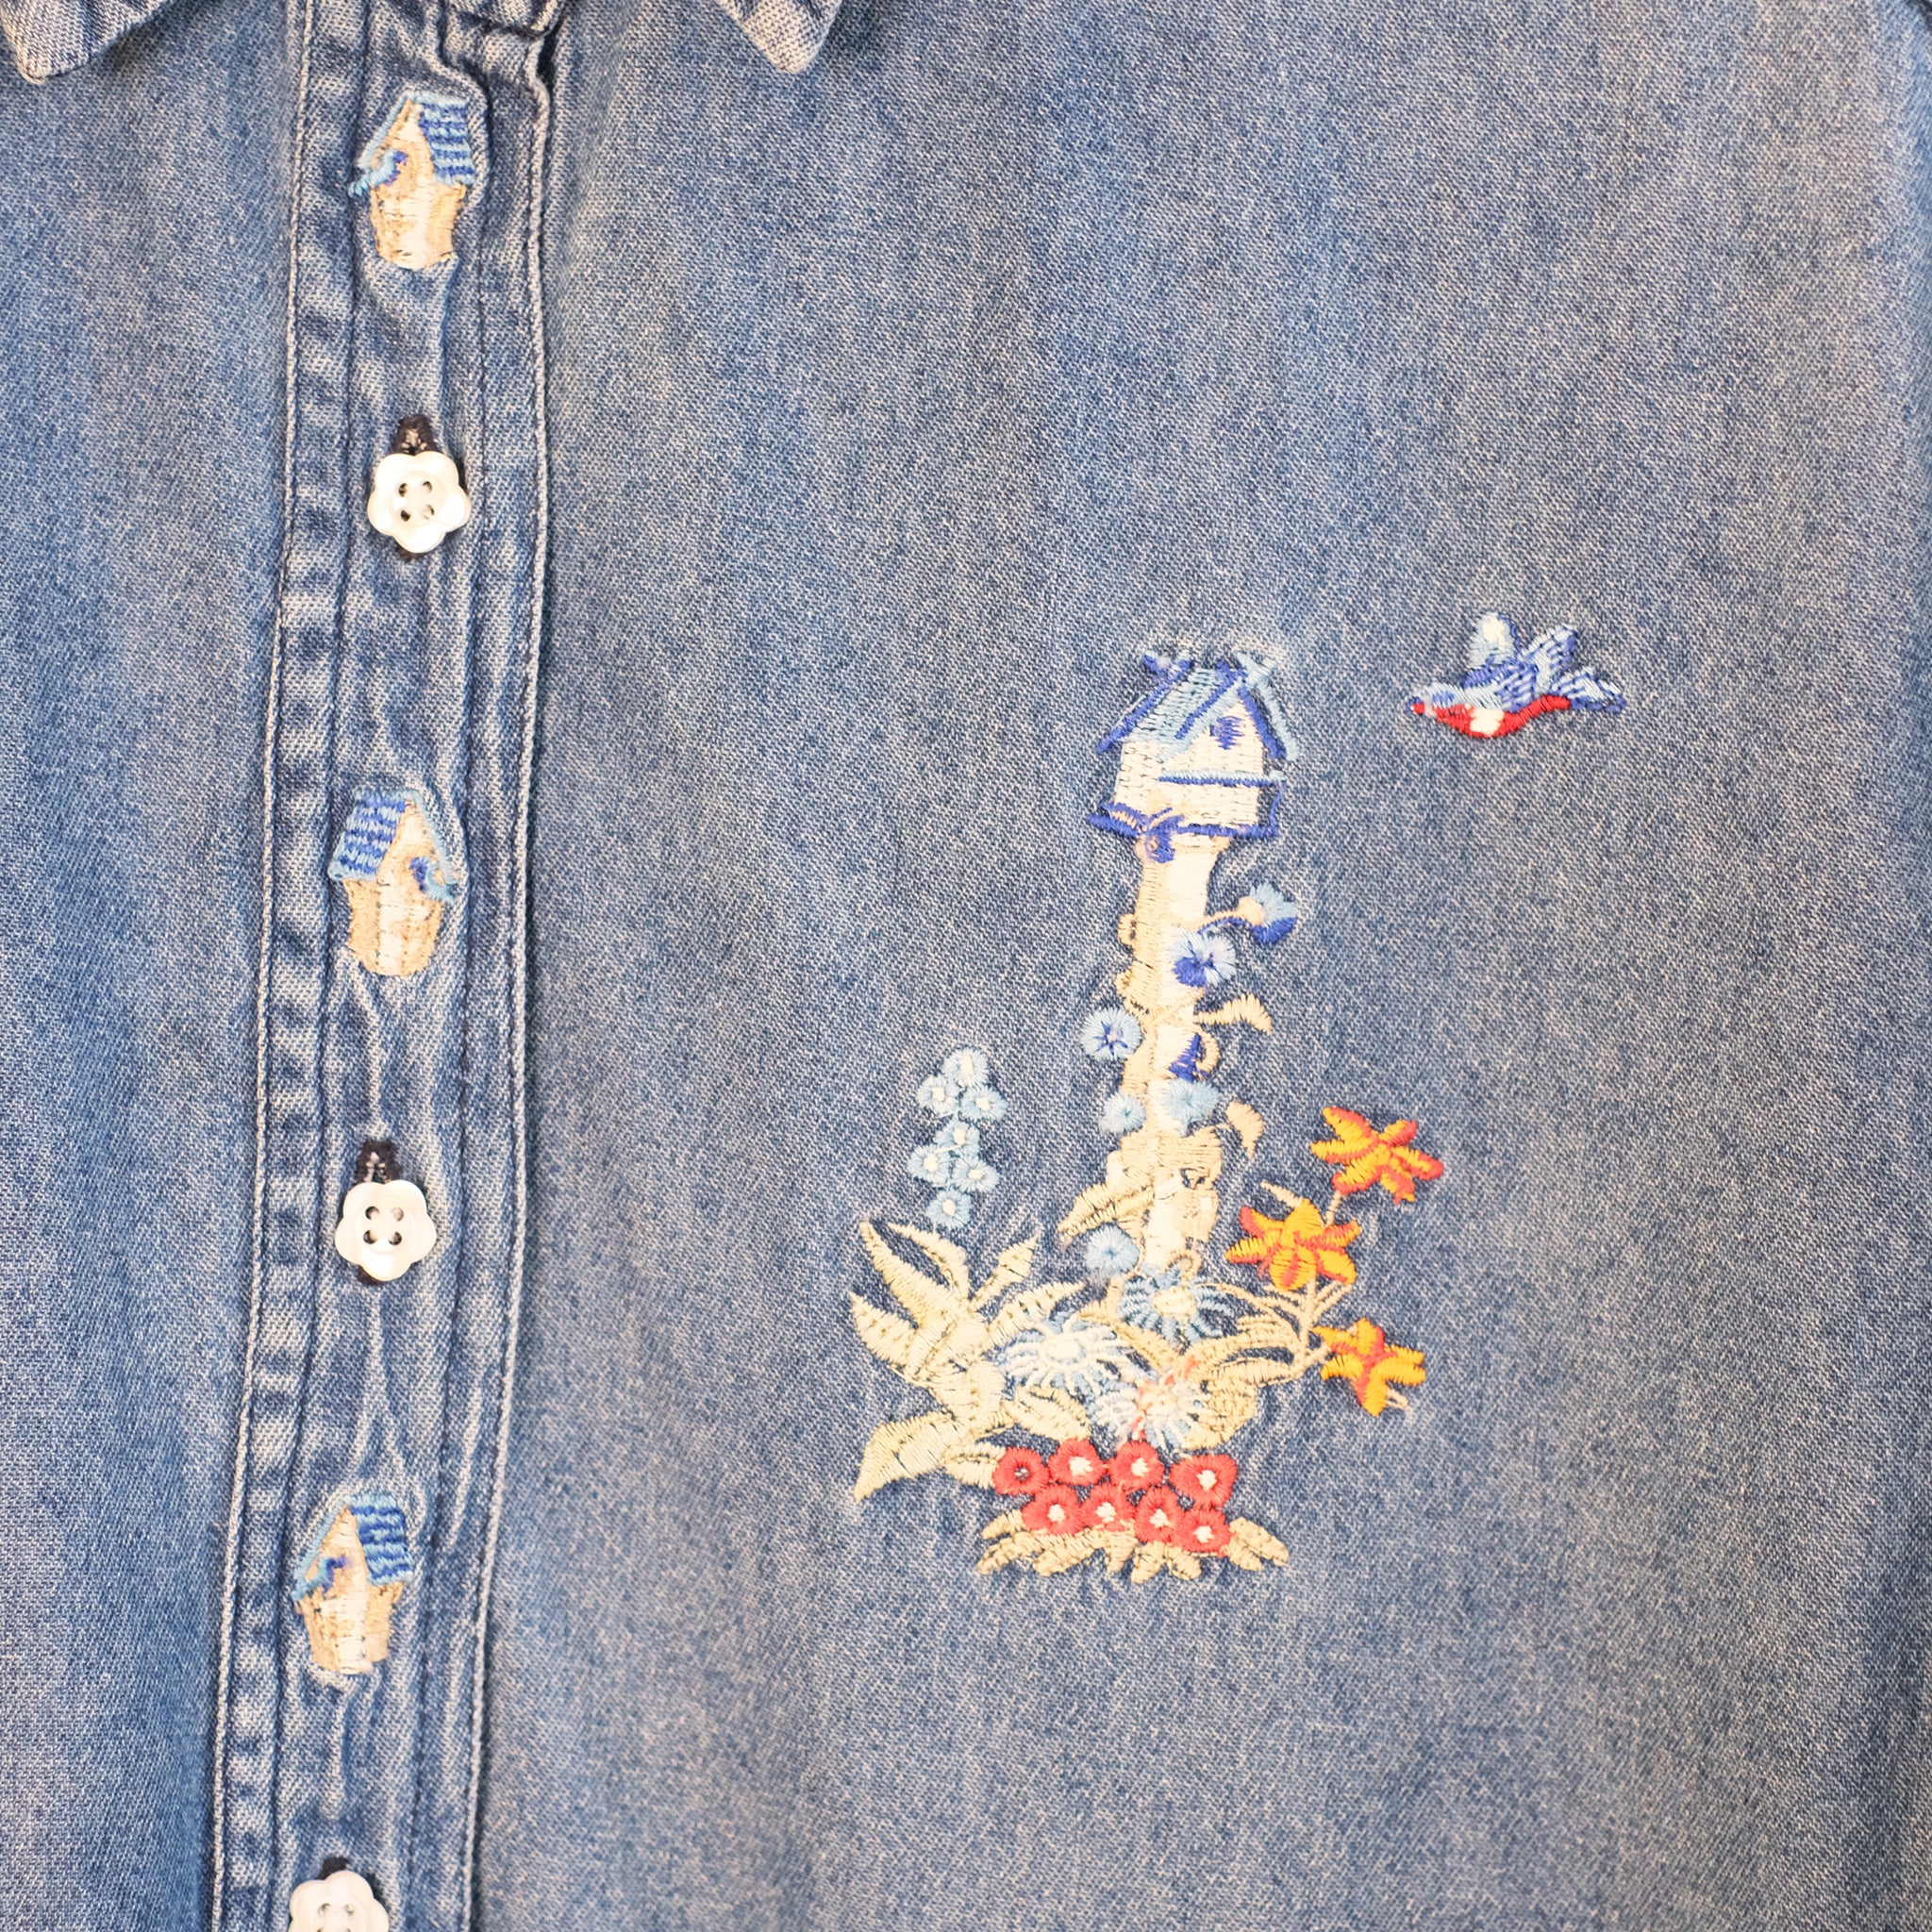 Vintage Wrangler Embroidered Shirt